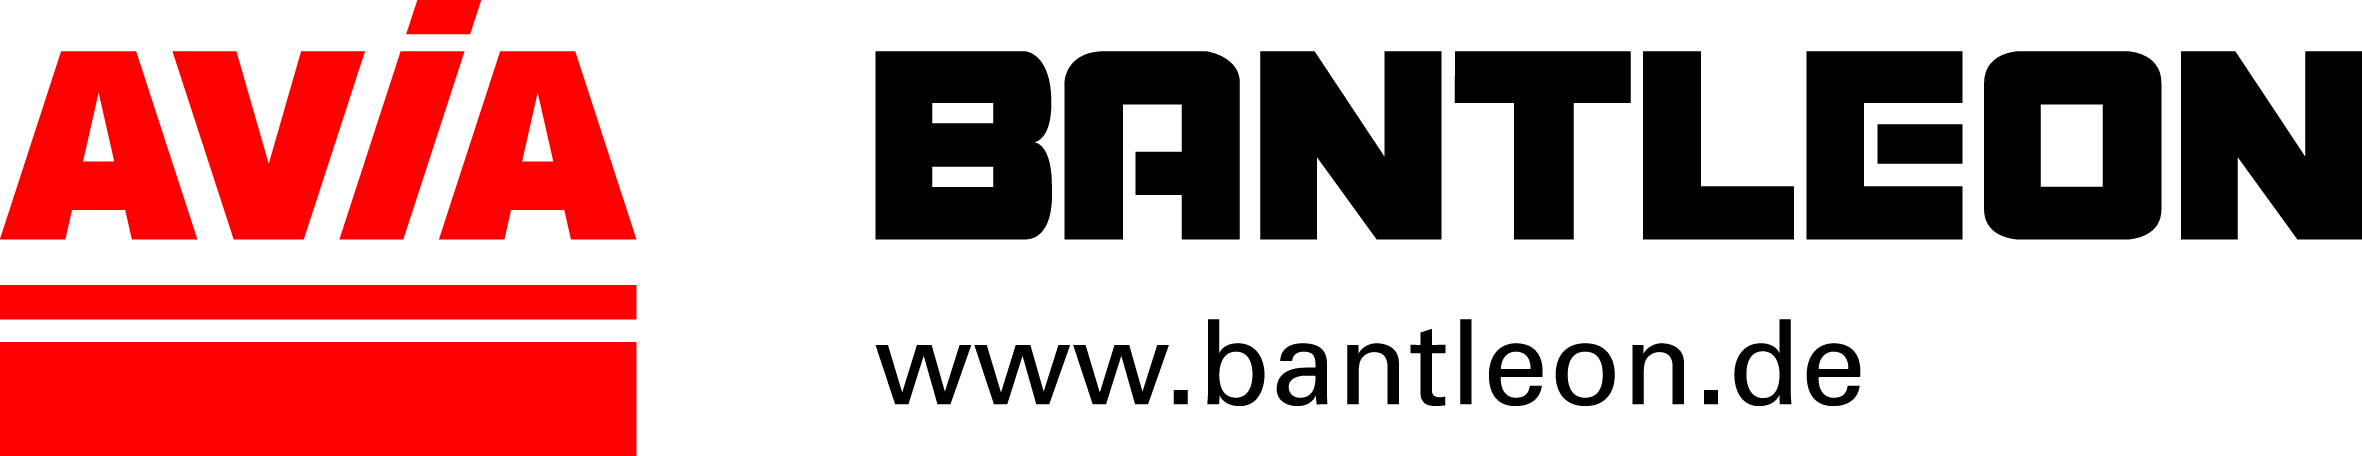 Bantleon_logo